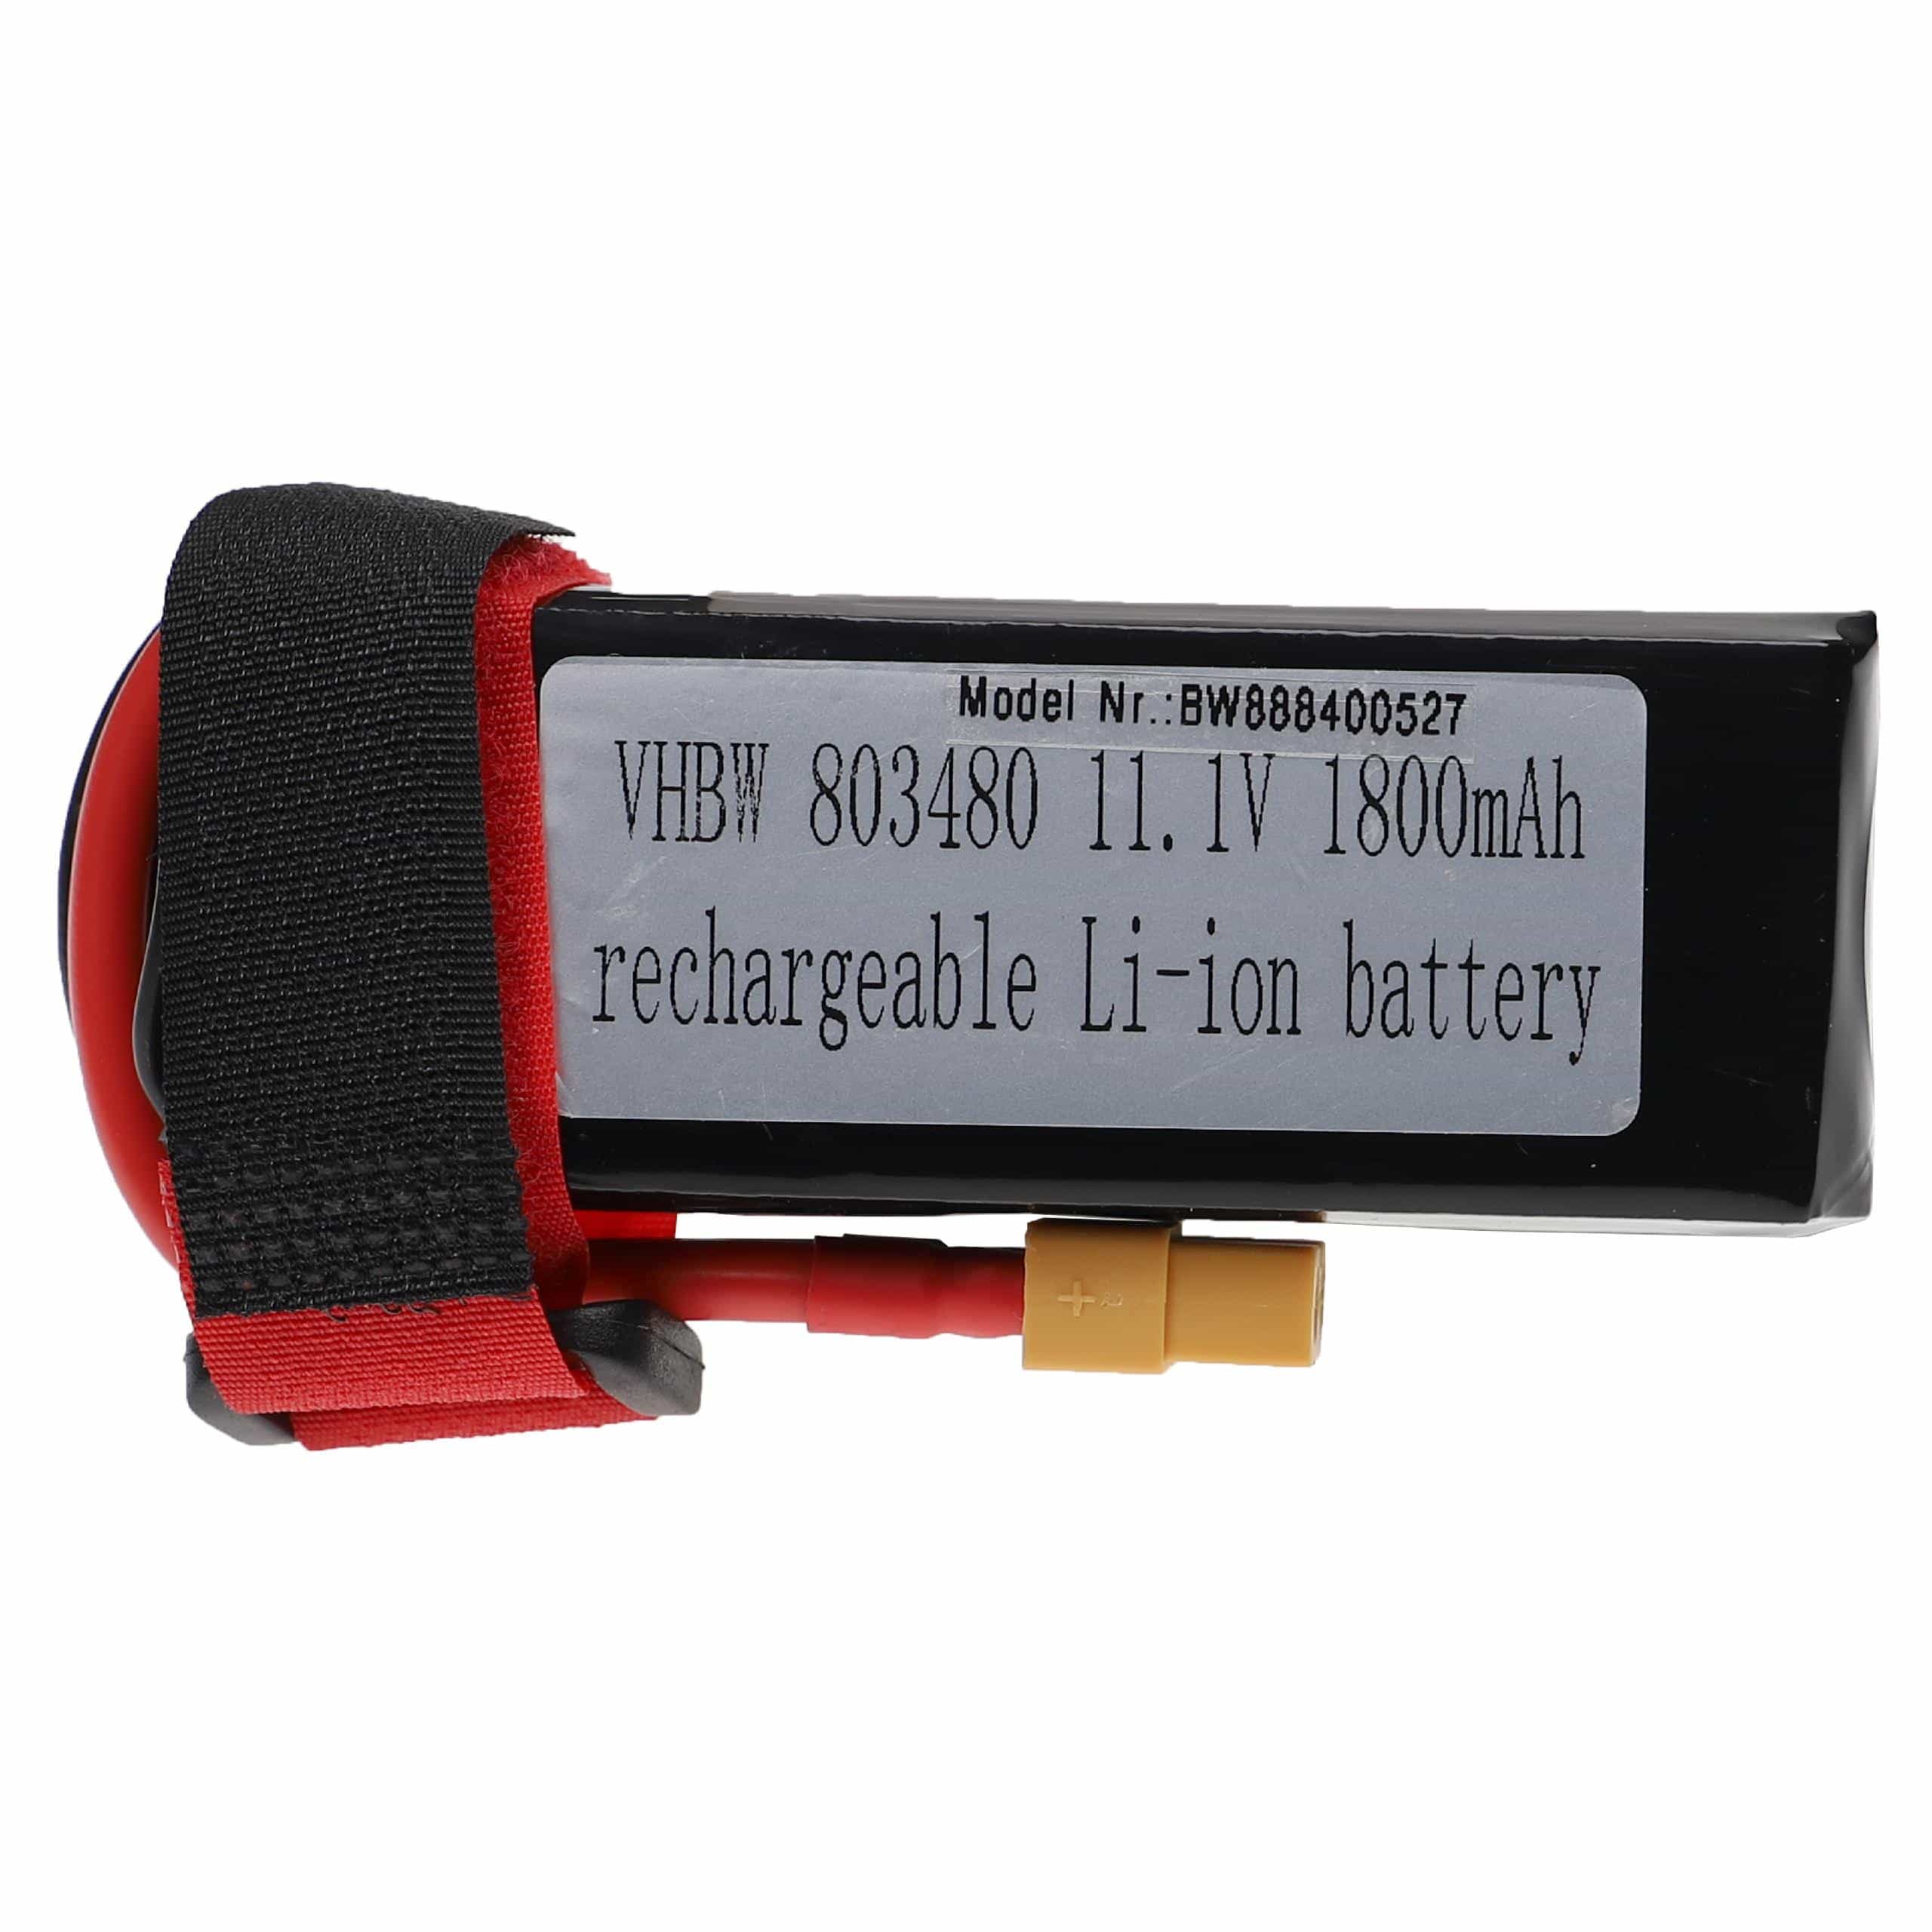 Model Making Device Replacement Battery - 1800mAh 11.1V Li-polymer, XT60